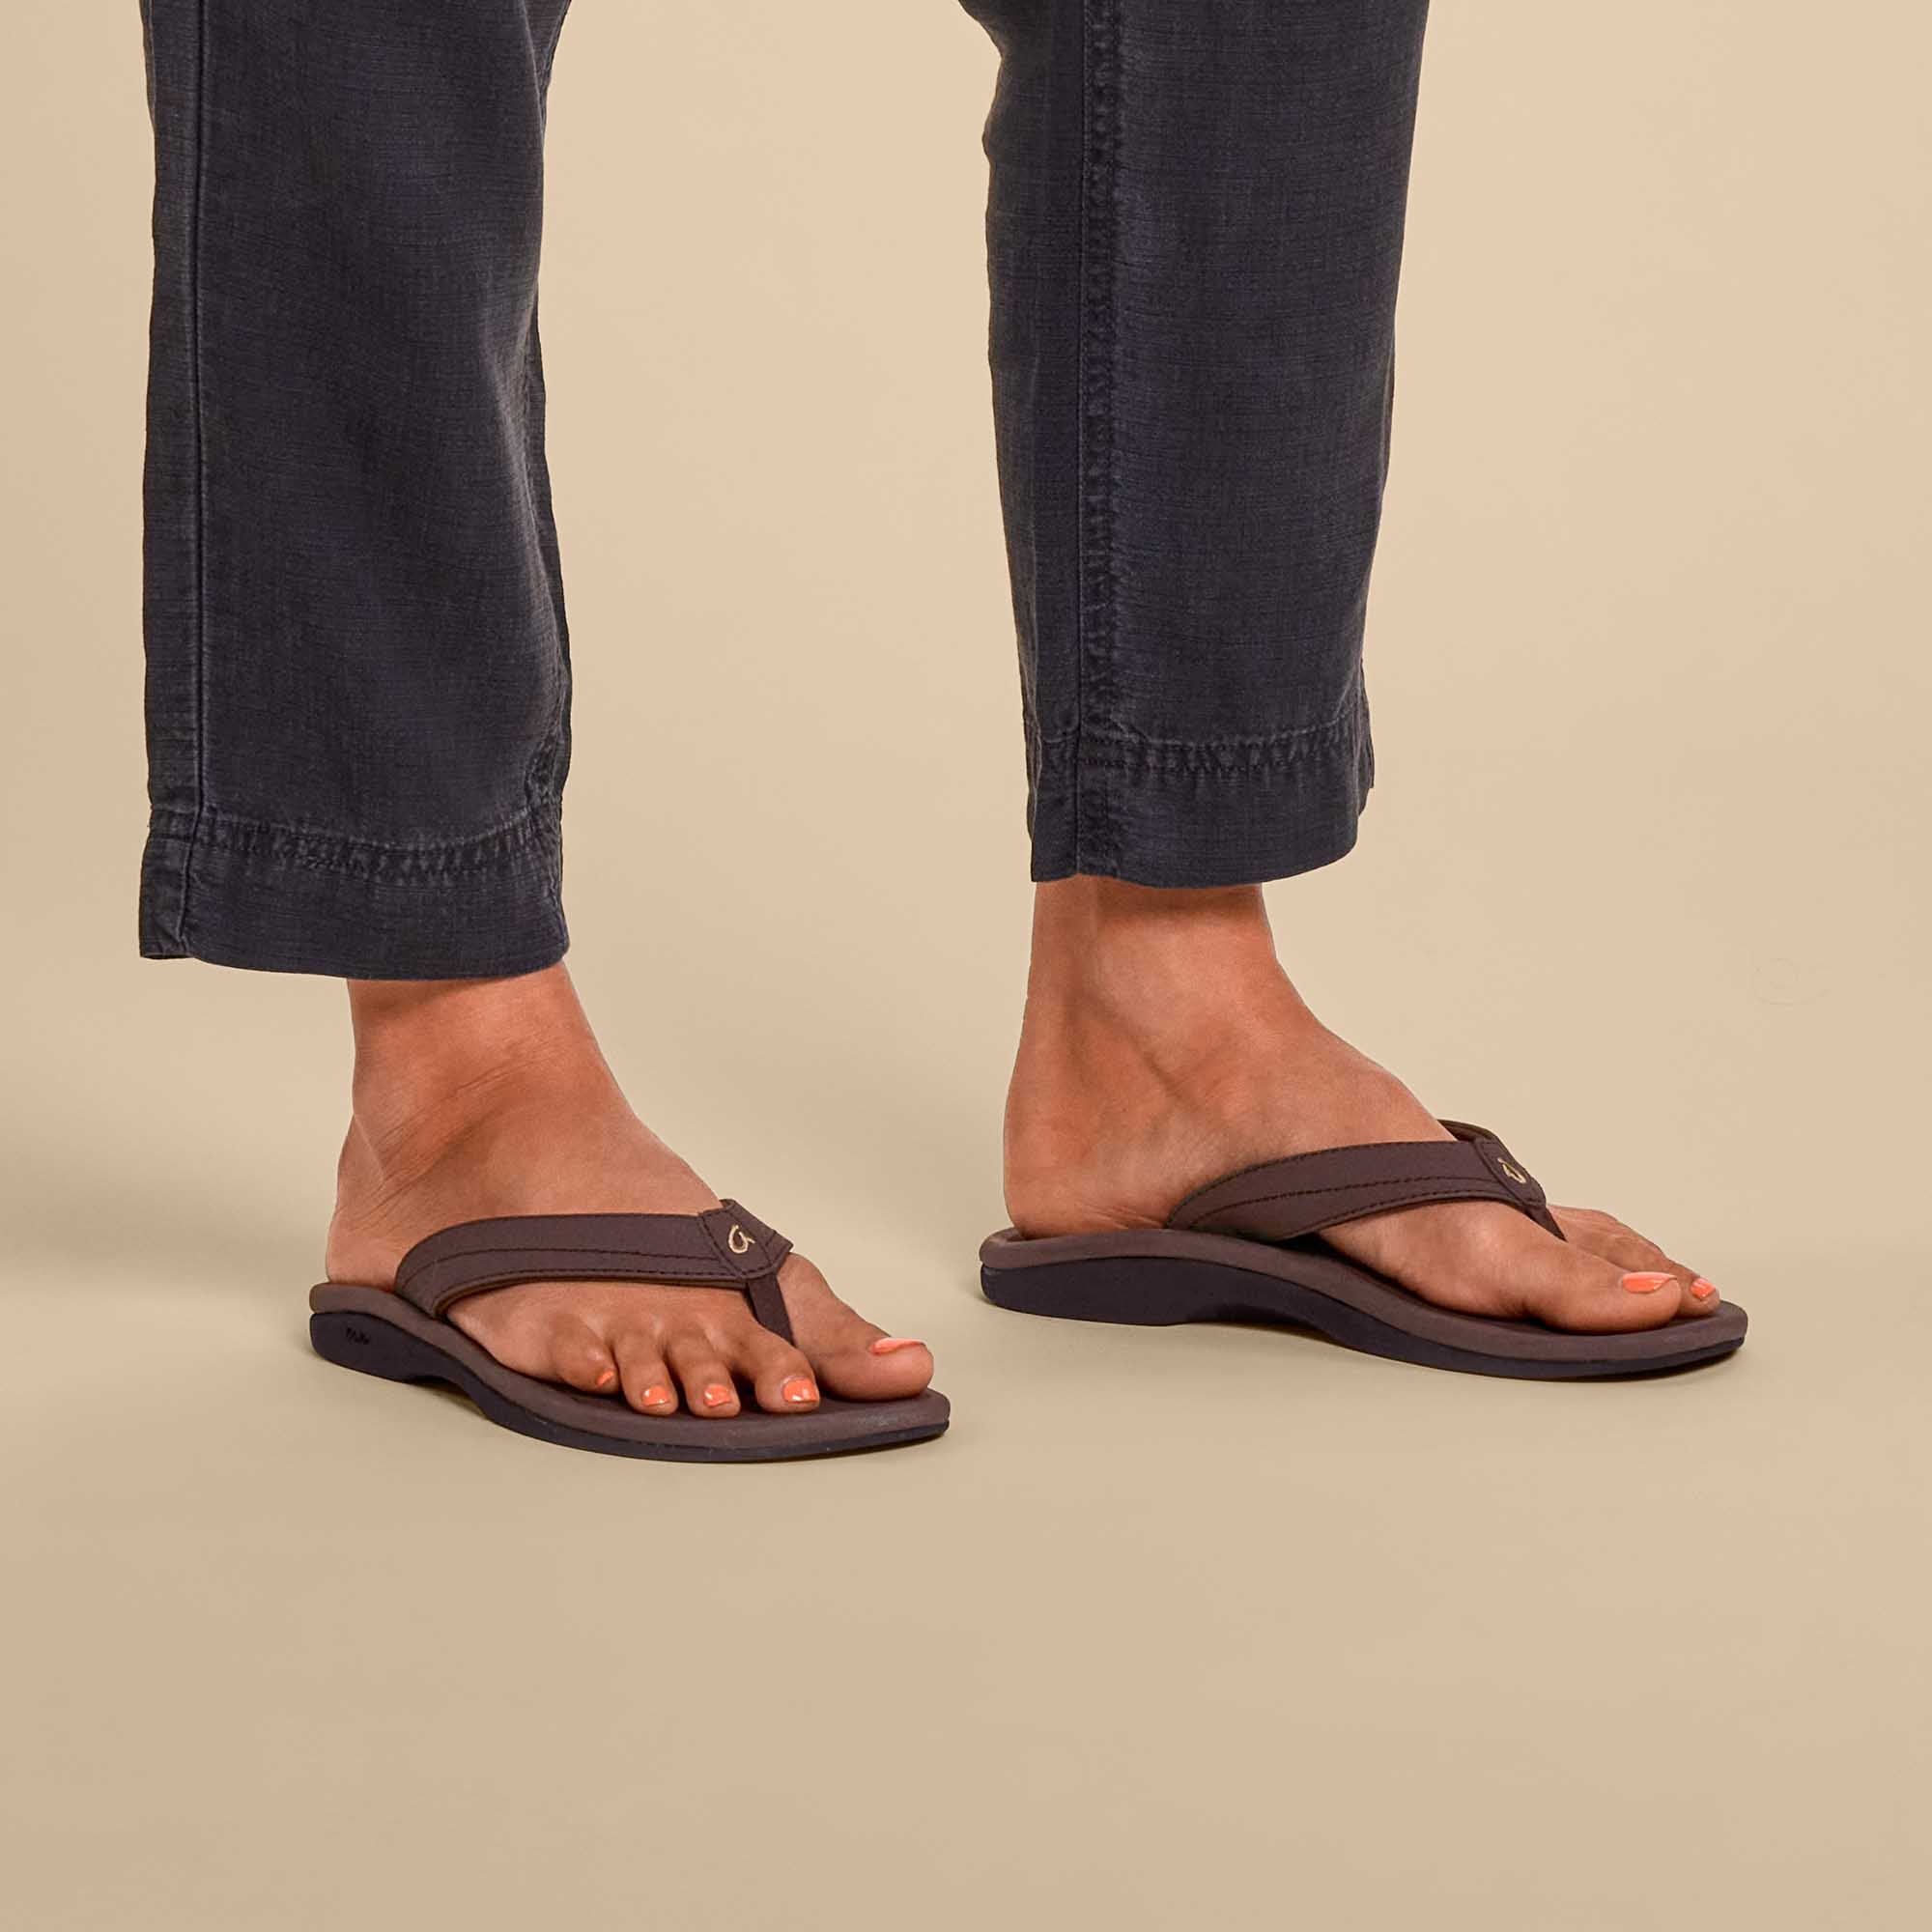  OLUKAI U'i Women's Beach Sandals, Premium Leather Flip-Flop  Slides, Braided Palm Inspired Design, Compression Molded Footbed,  Sahara/Sahara, 6